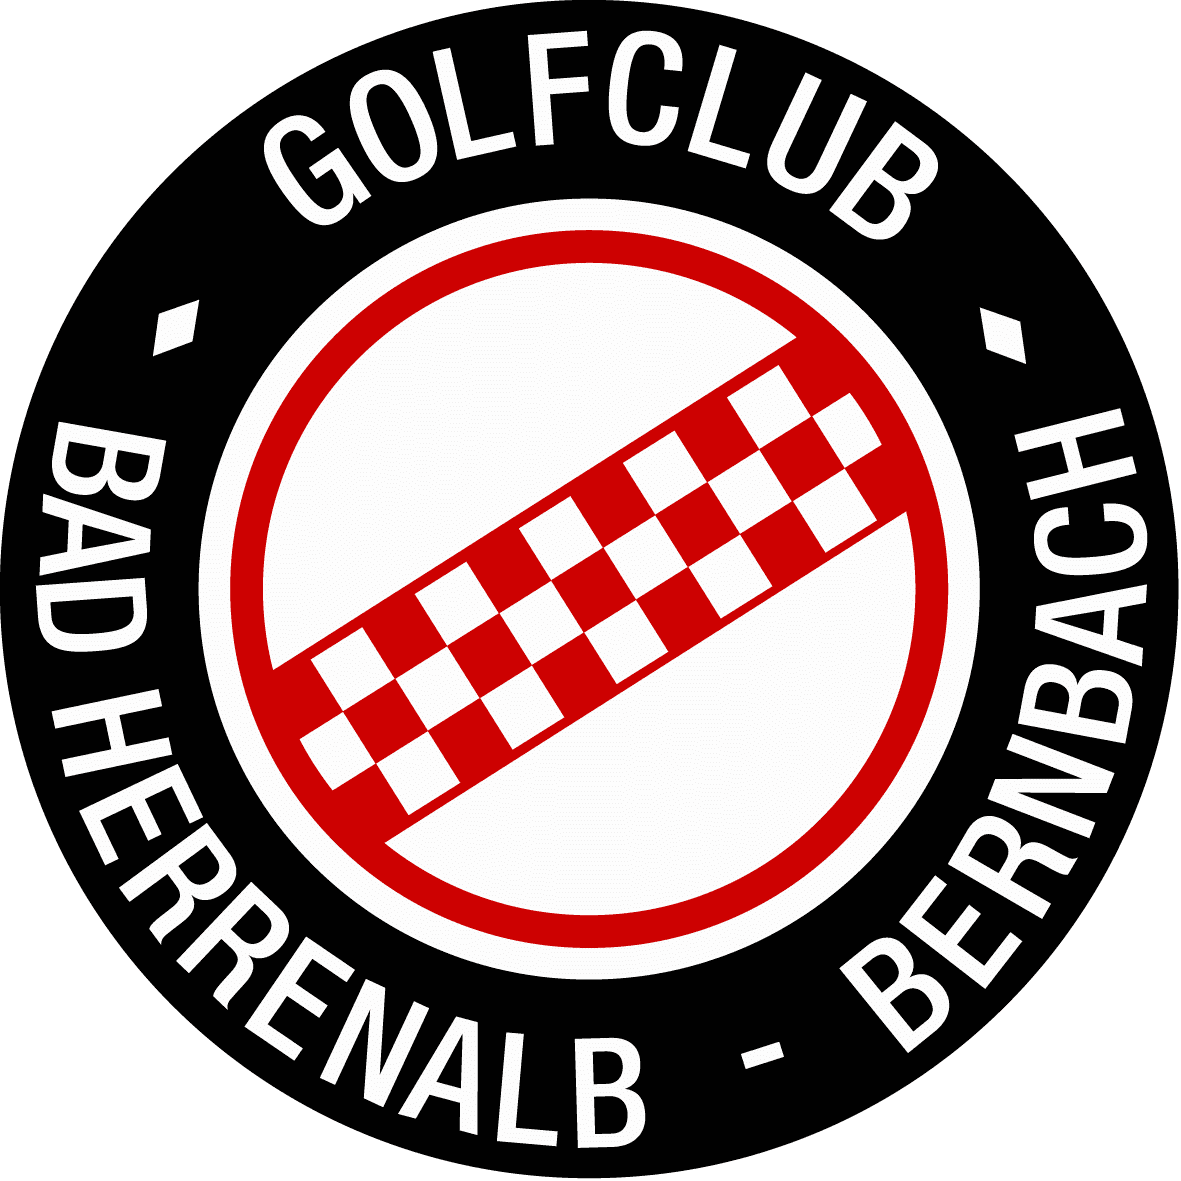 Logo des Golfsclub Bad Herrenbalb - Bernbach